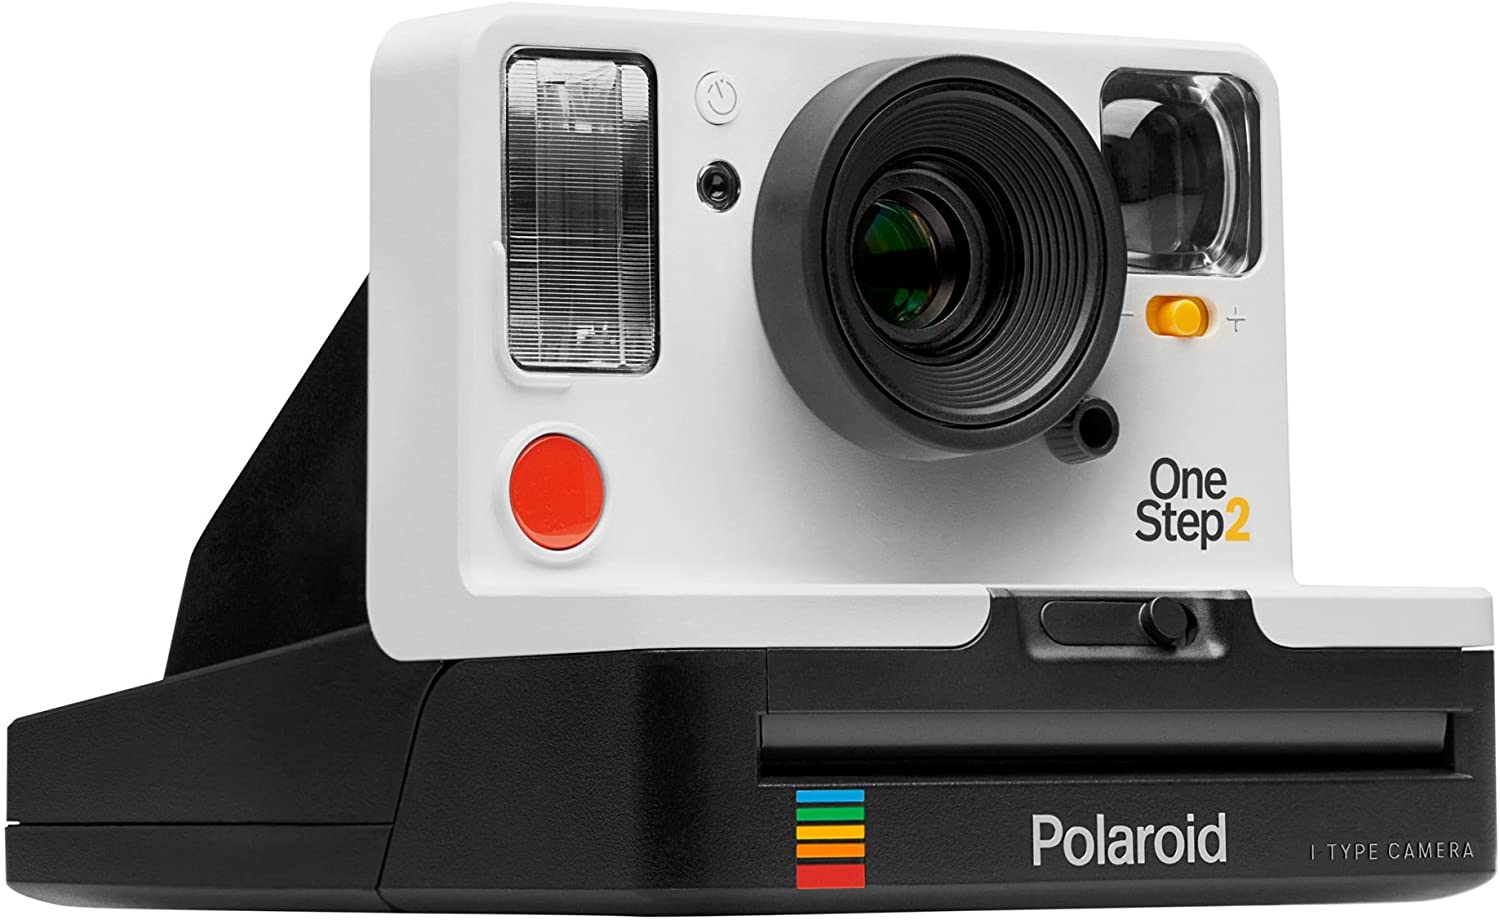 Polariod onestep2 camera